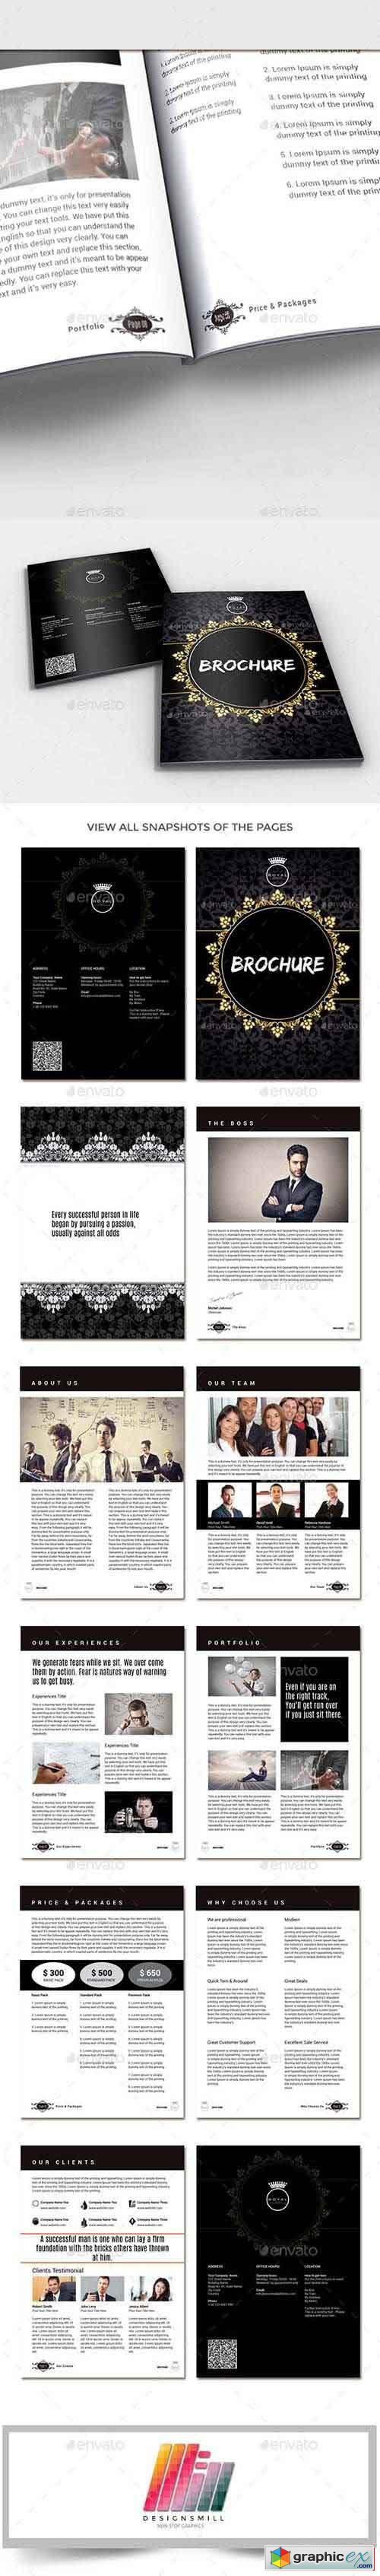 Royal Multipurpose Brochure Template for Business